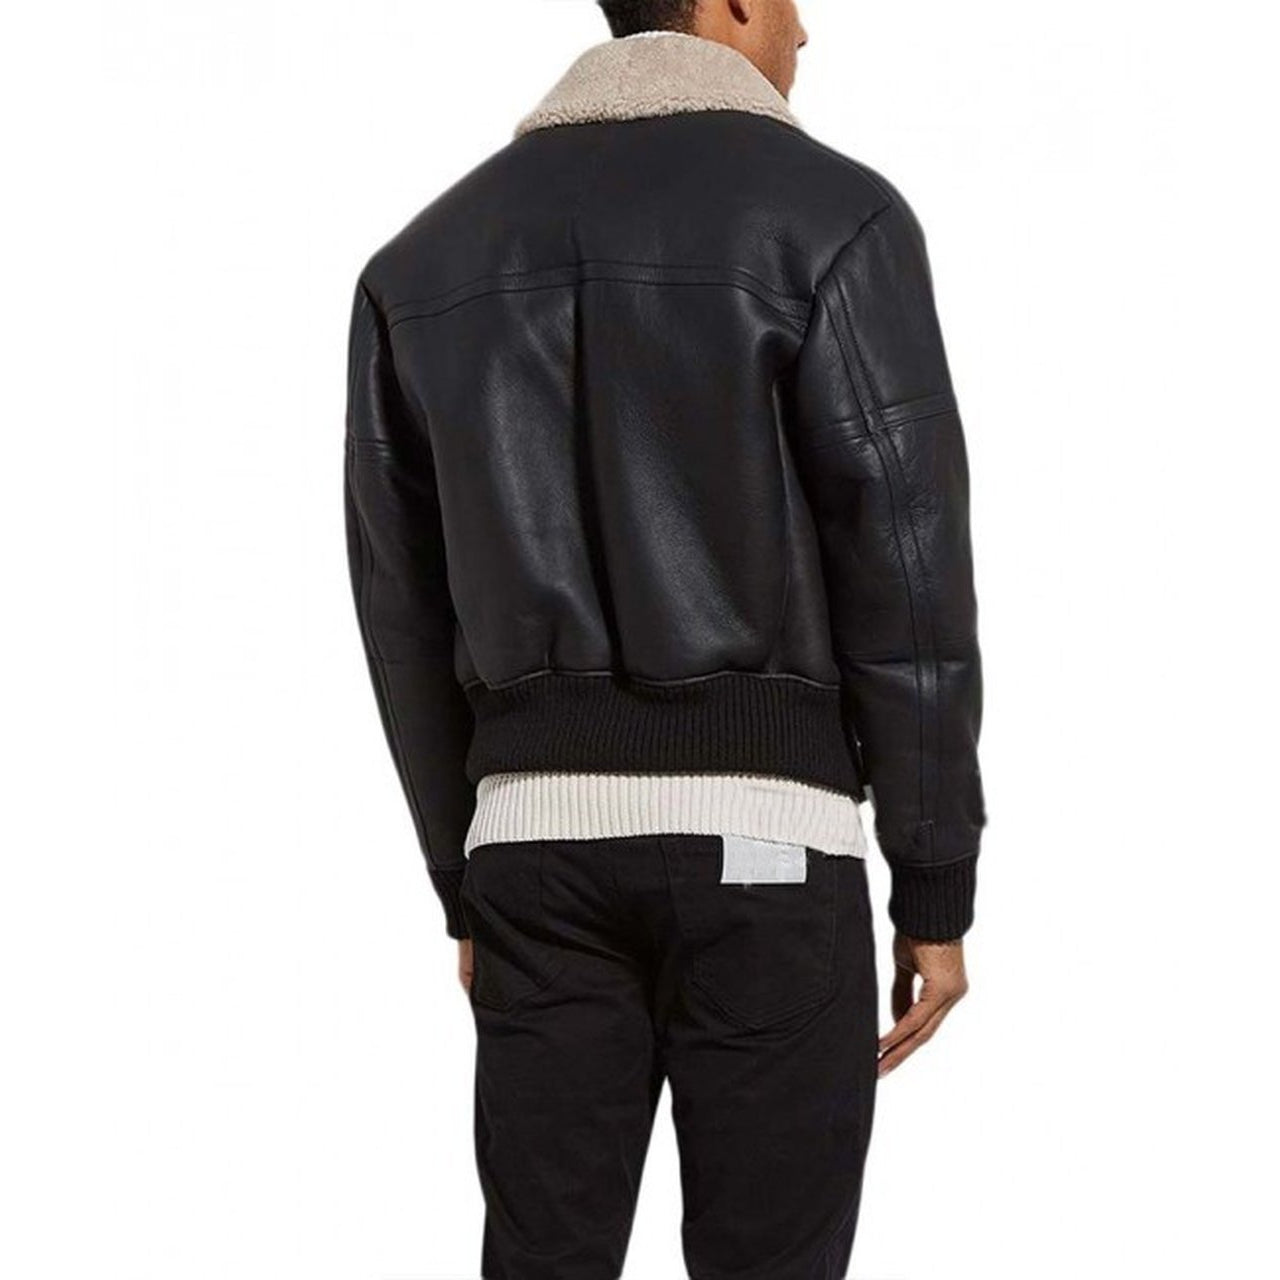 Black Shearling Bomber Leather Jacket for Men - Leather Jacket